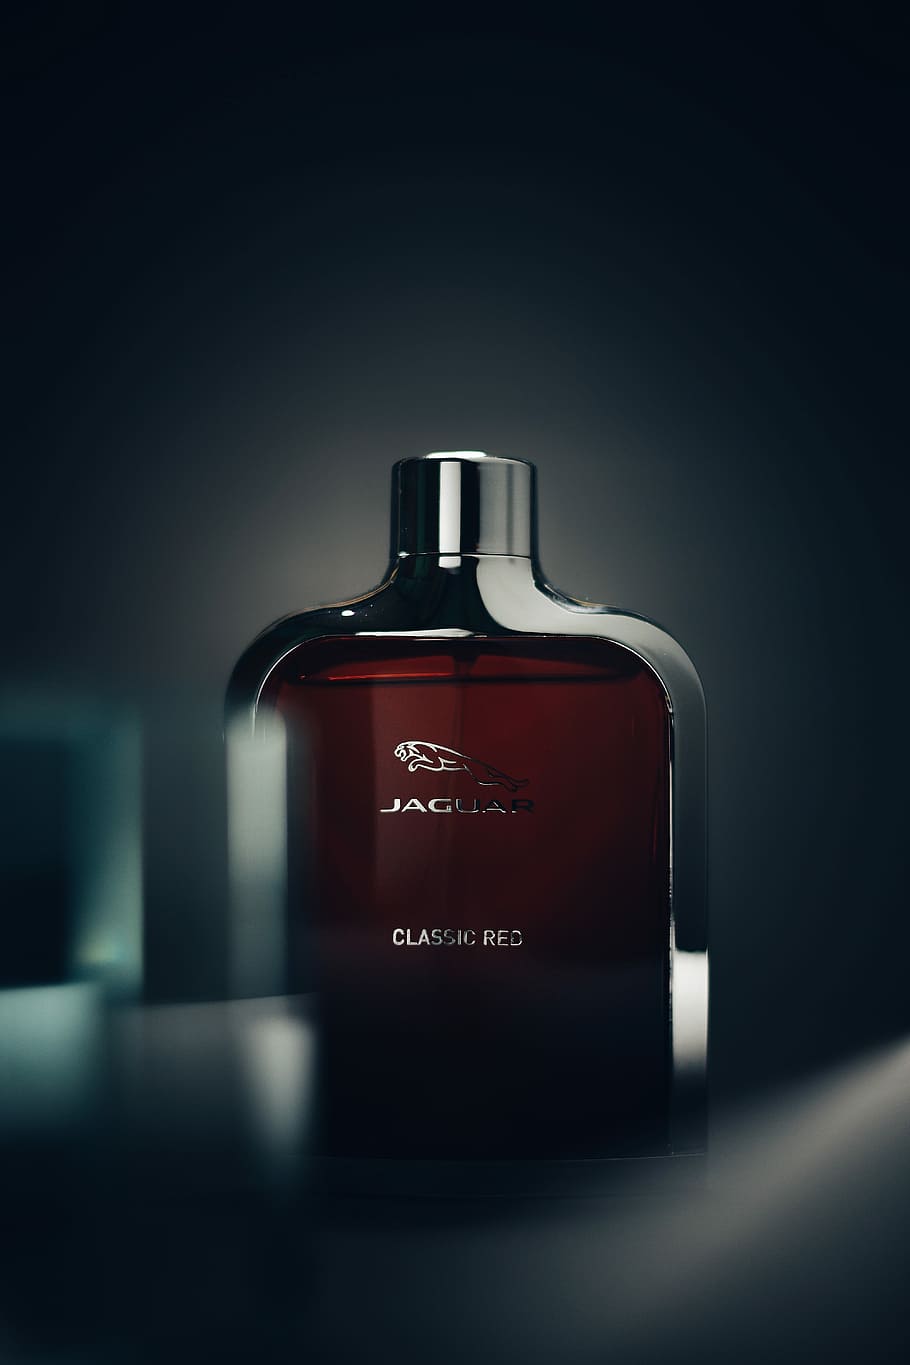 Hd Wallpaper Jaguar Classic Red Fragrance Bottle Aftershave Scent Perfume Wallpaper Flare